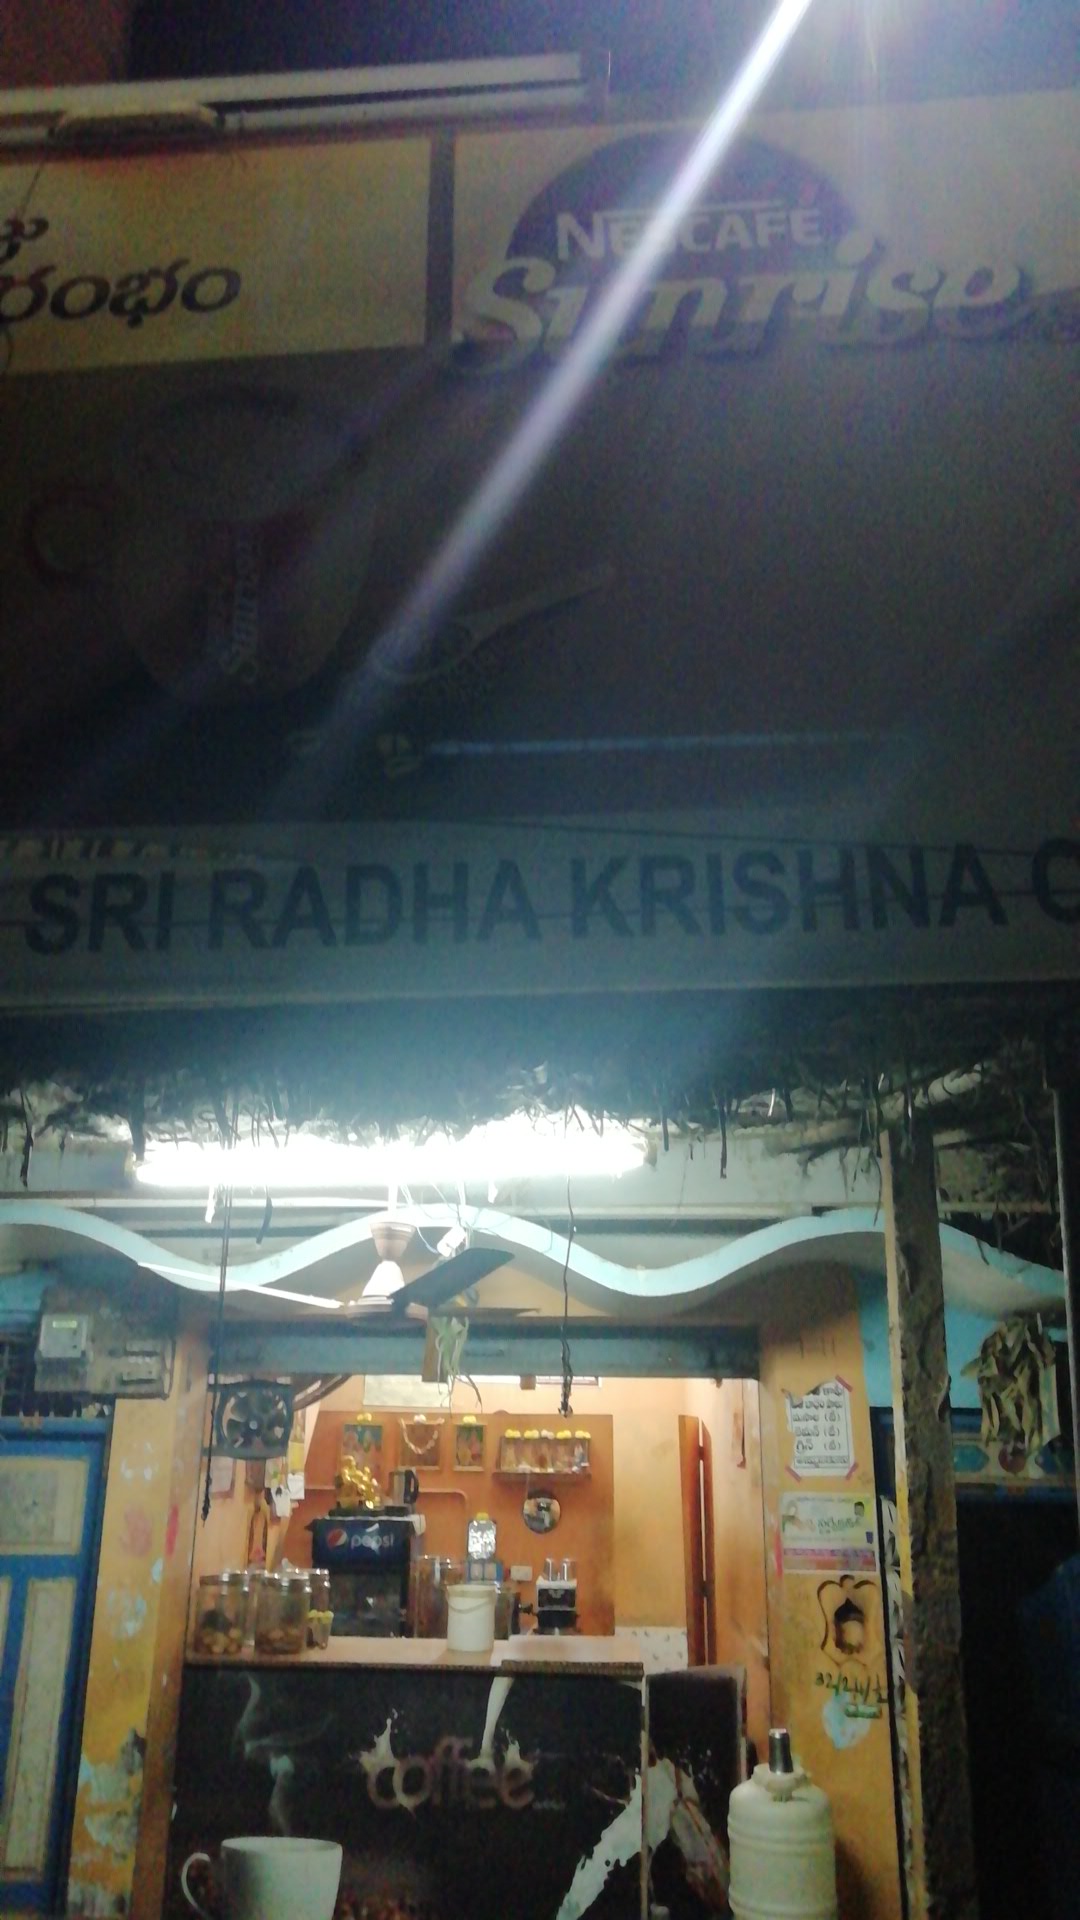 Sri radha krishna cafe